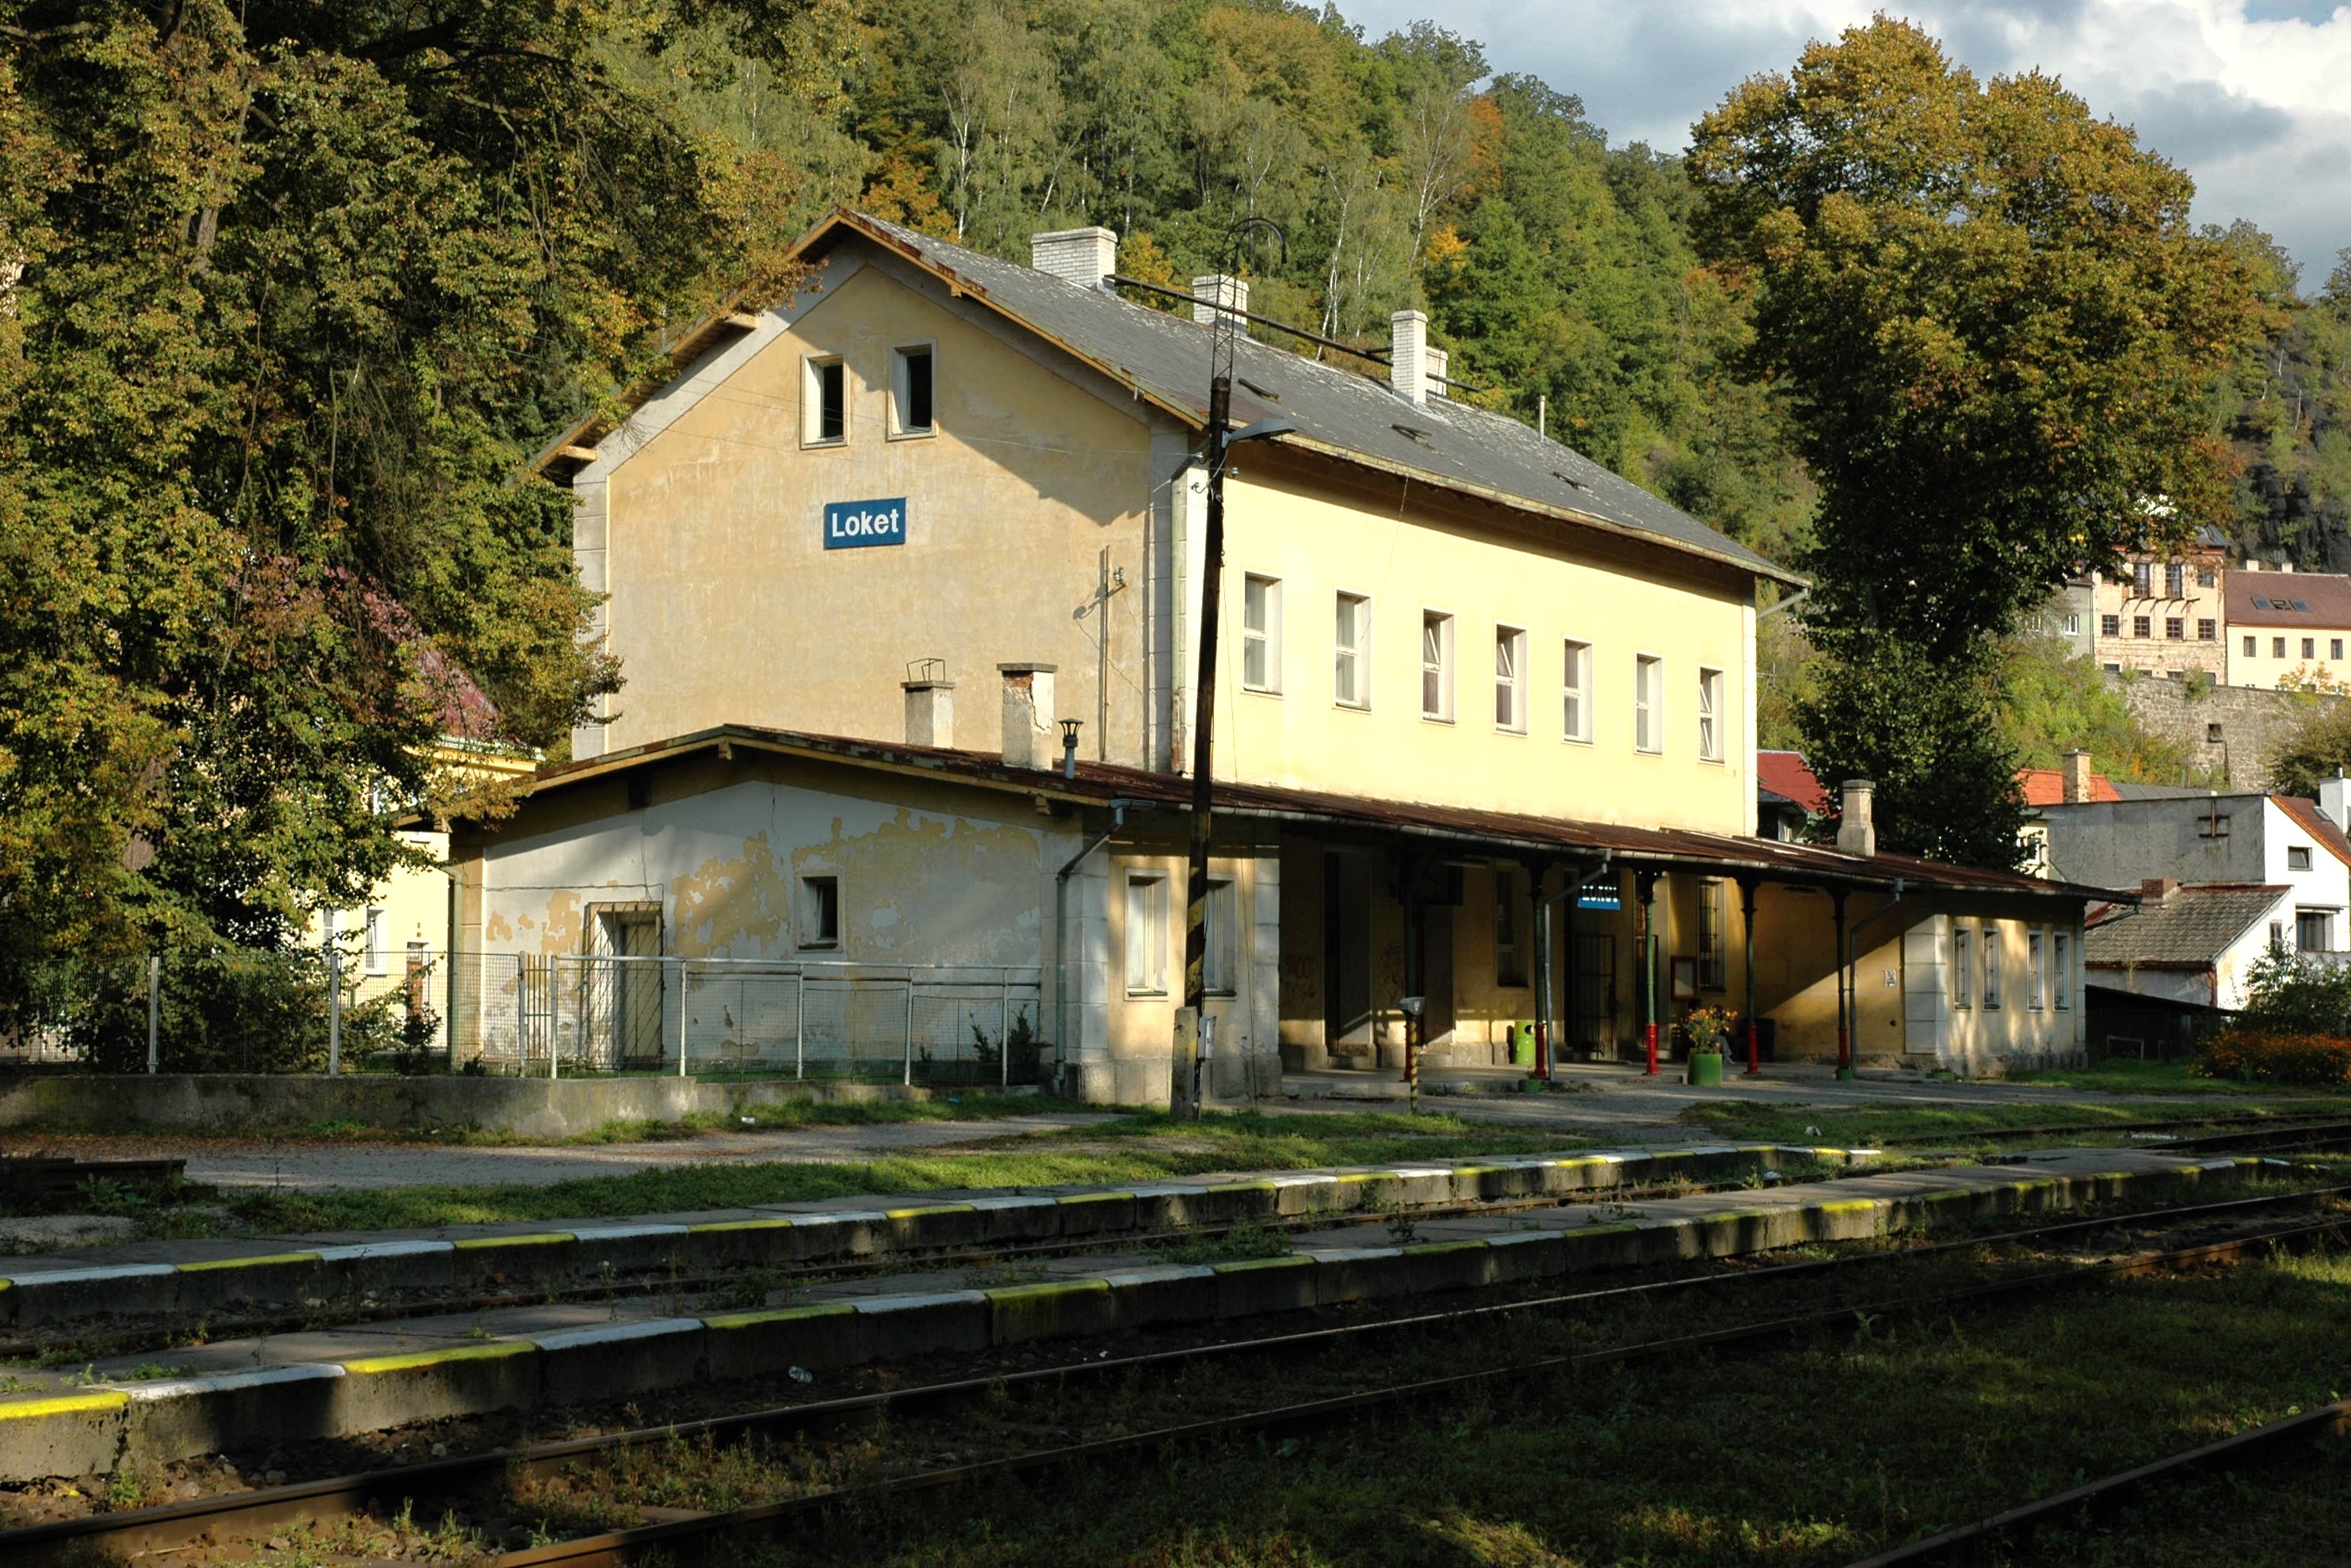 Loket station